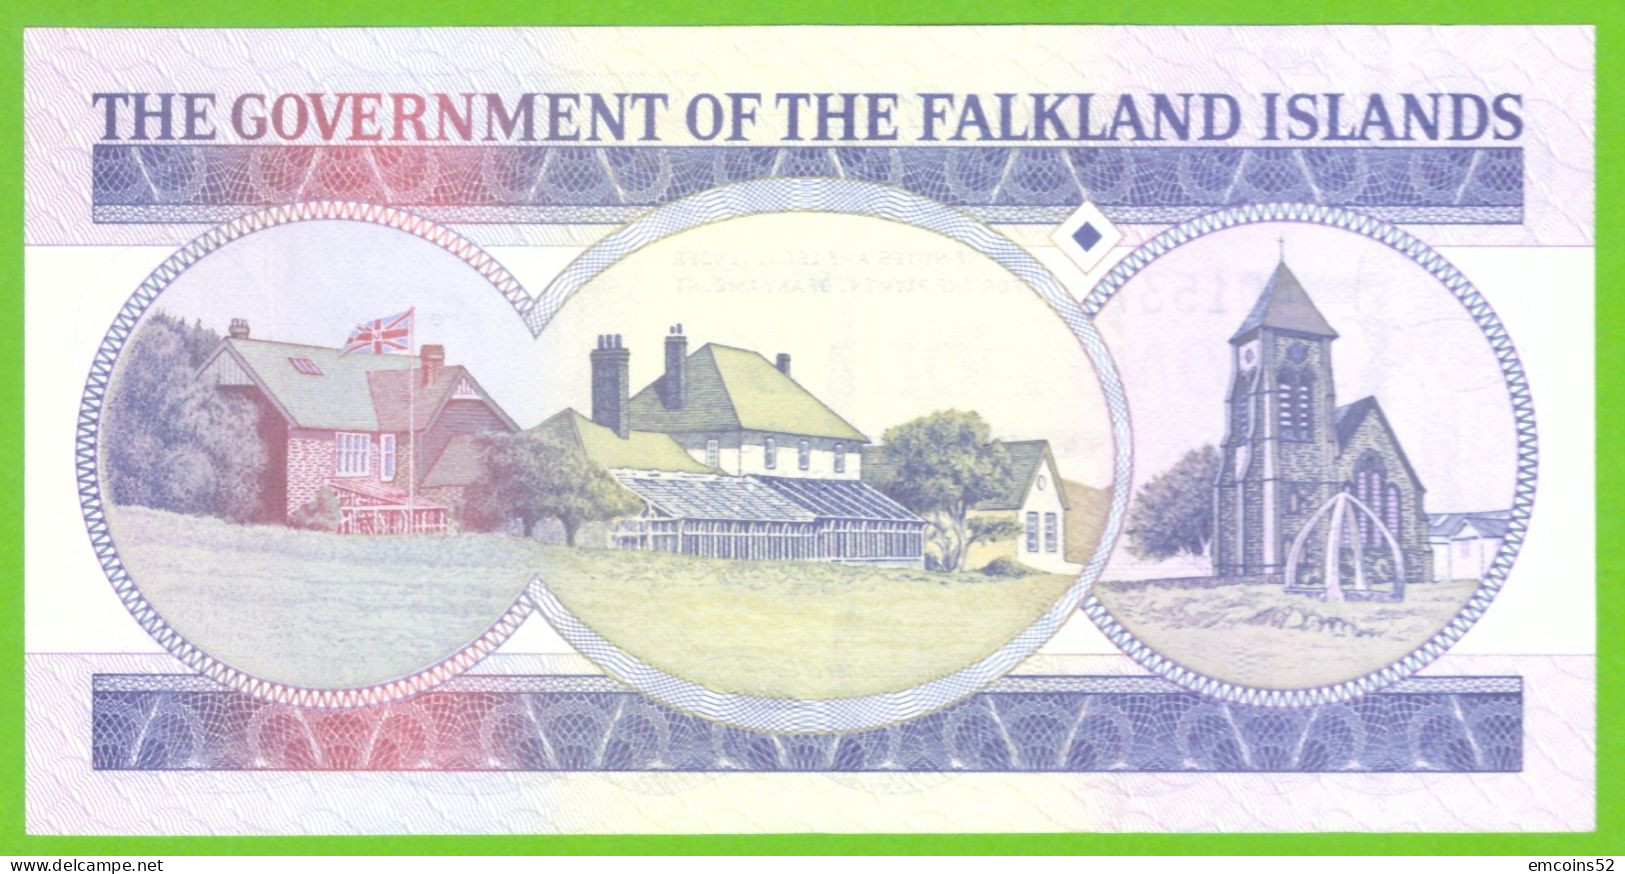 FALKLAND ISLAND 1 POUND 1984 P-13 UNC- - Falkland Islands